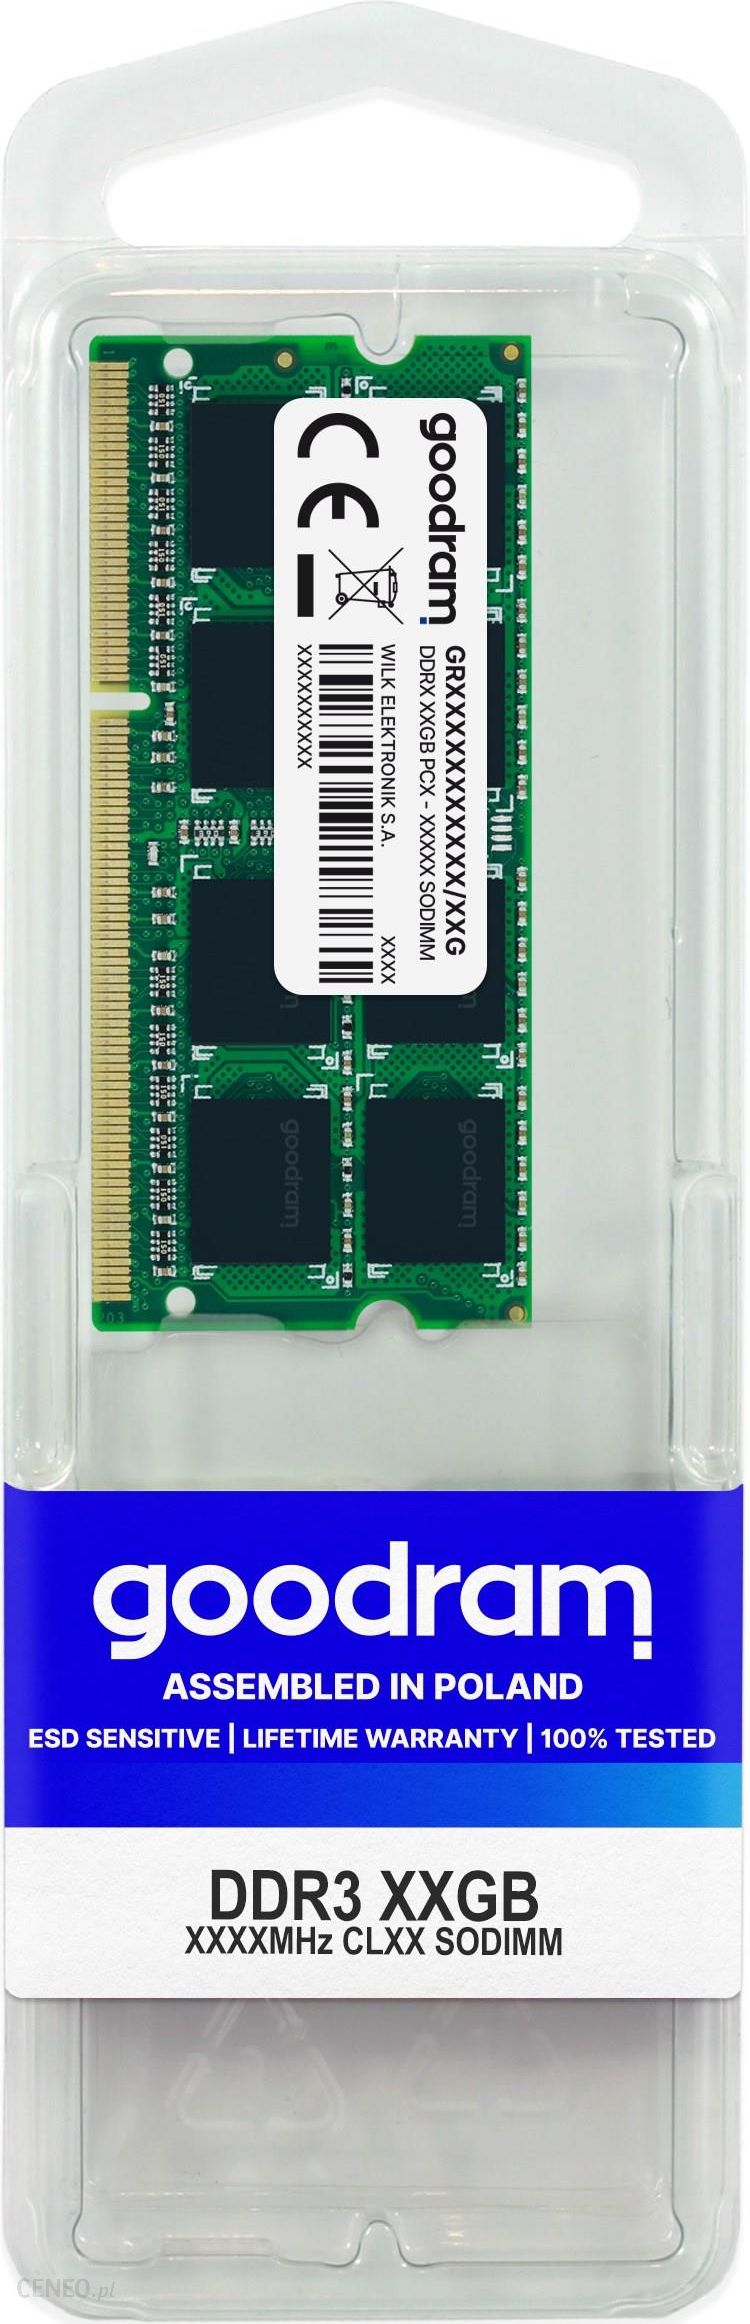 Ram DDR3 16go (2x8go) 1600MHz PC3-12800 Udimm CL11 Non-ECC